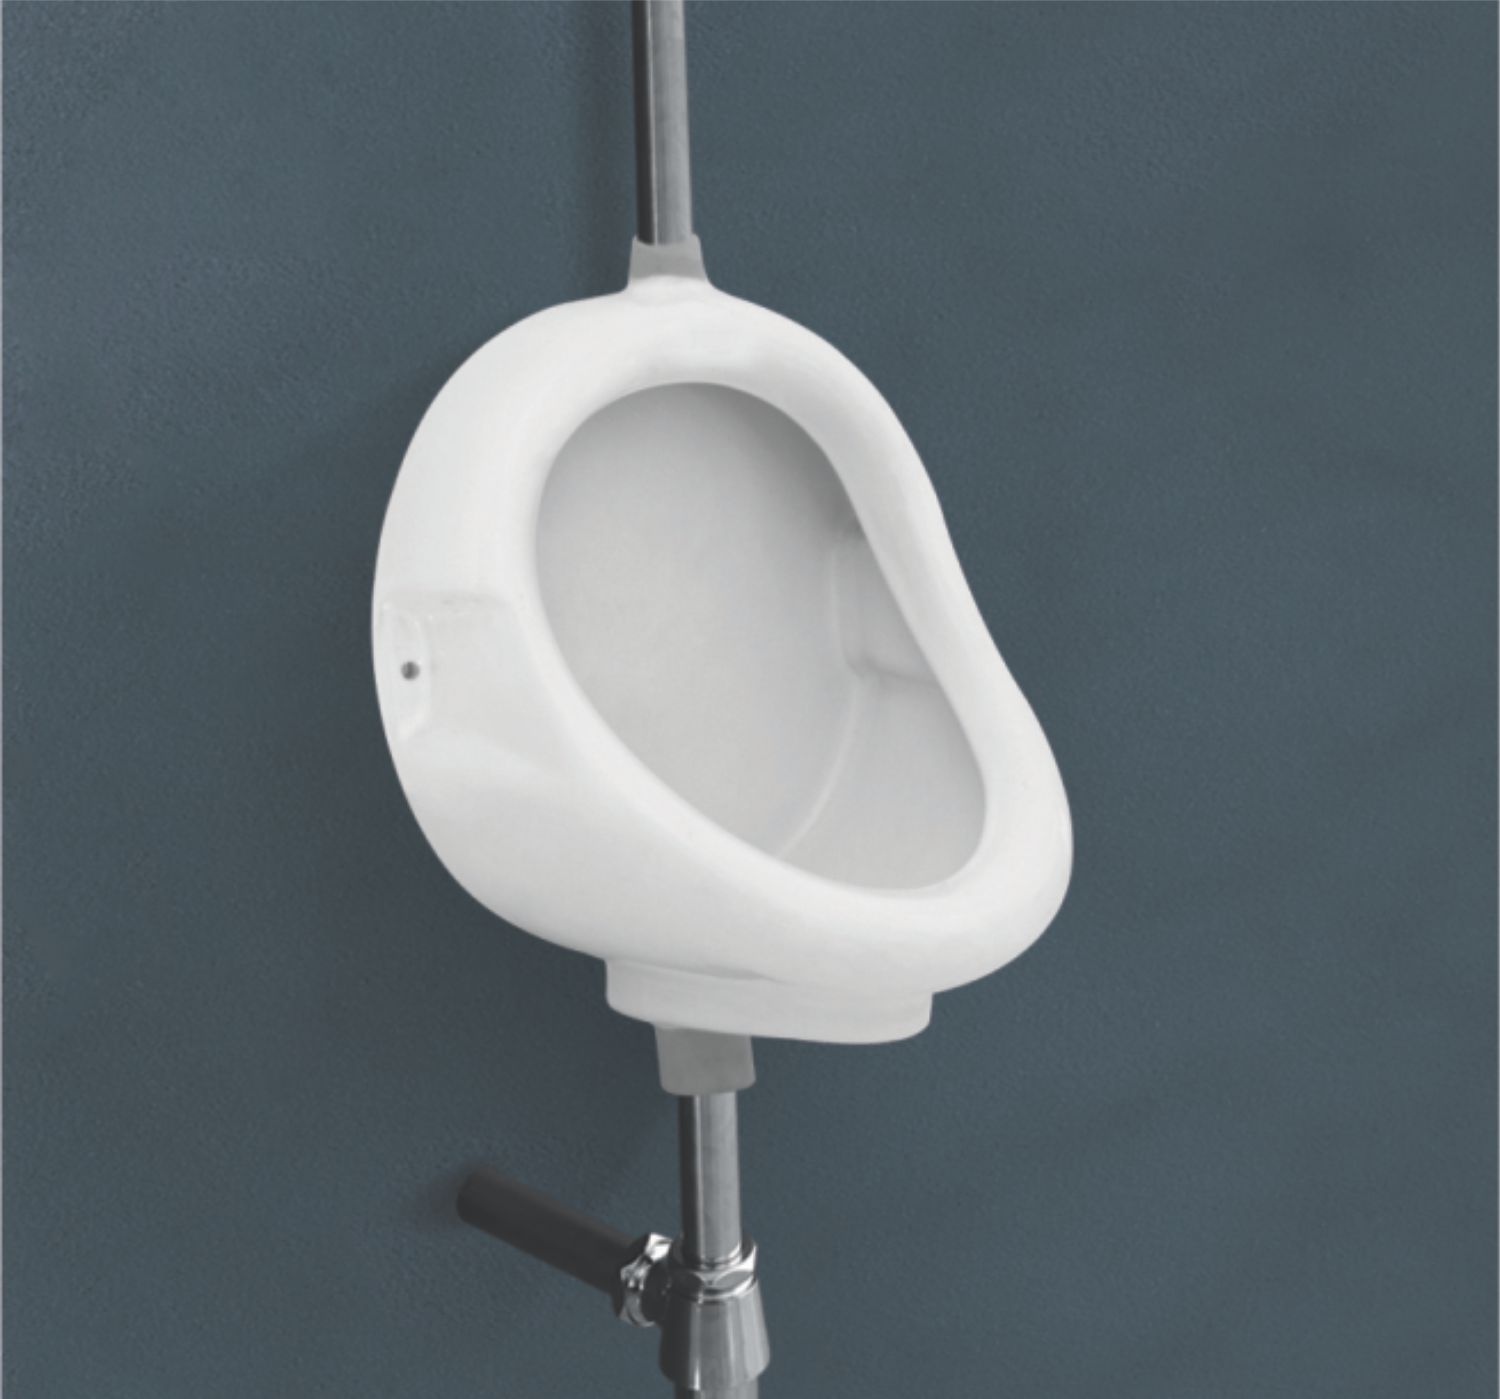 Flat Back Ceramic Urinal